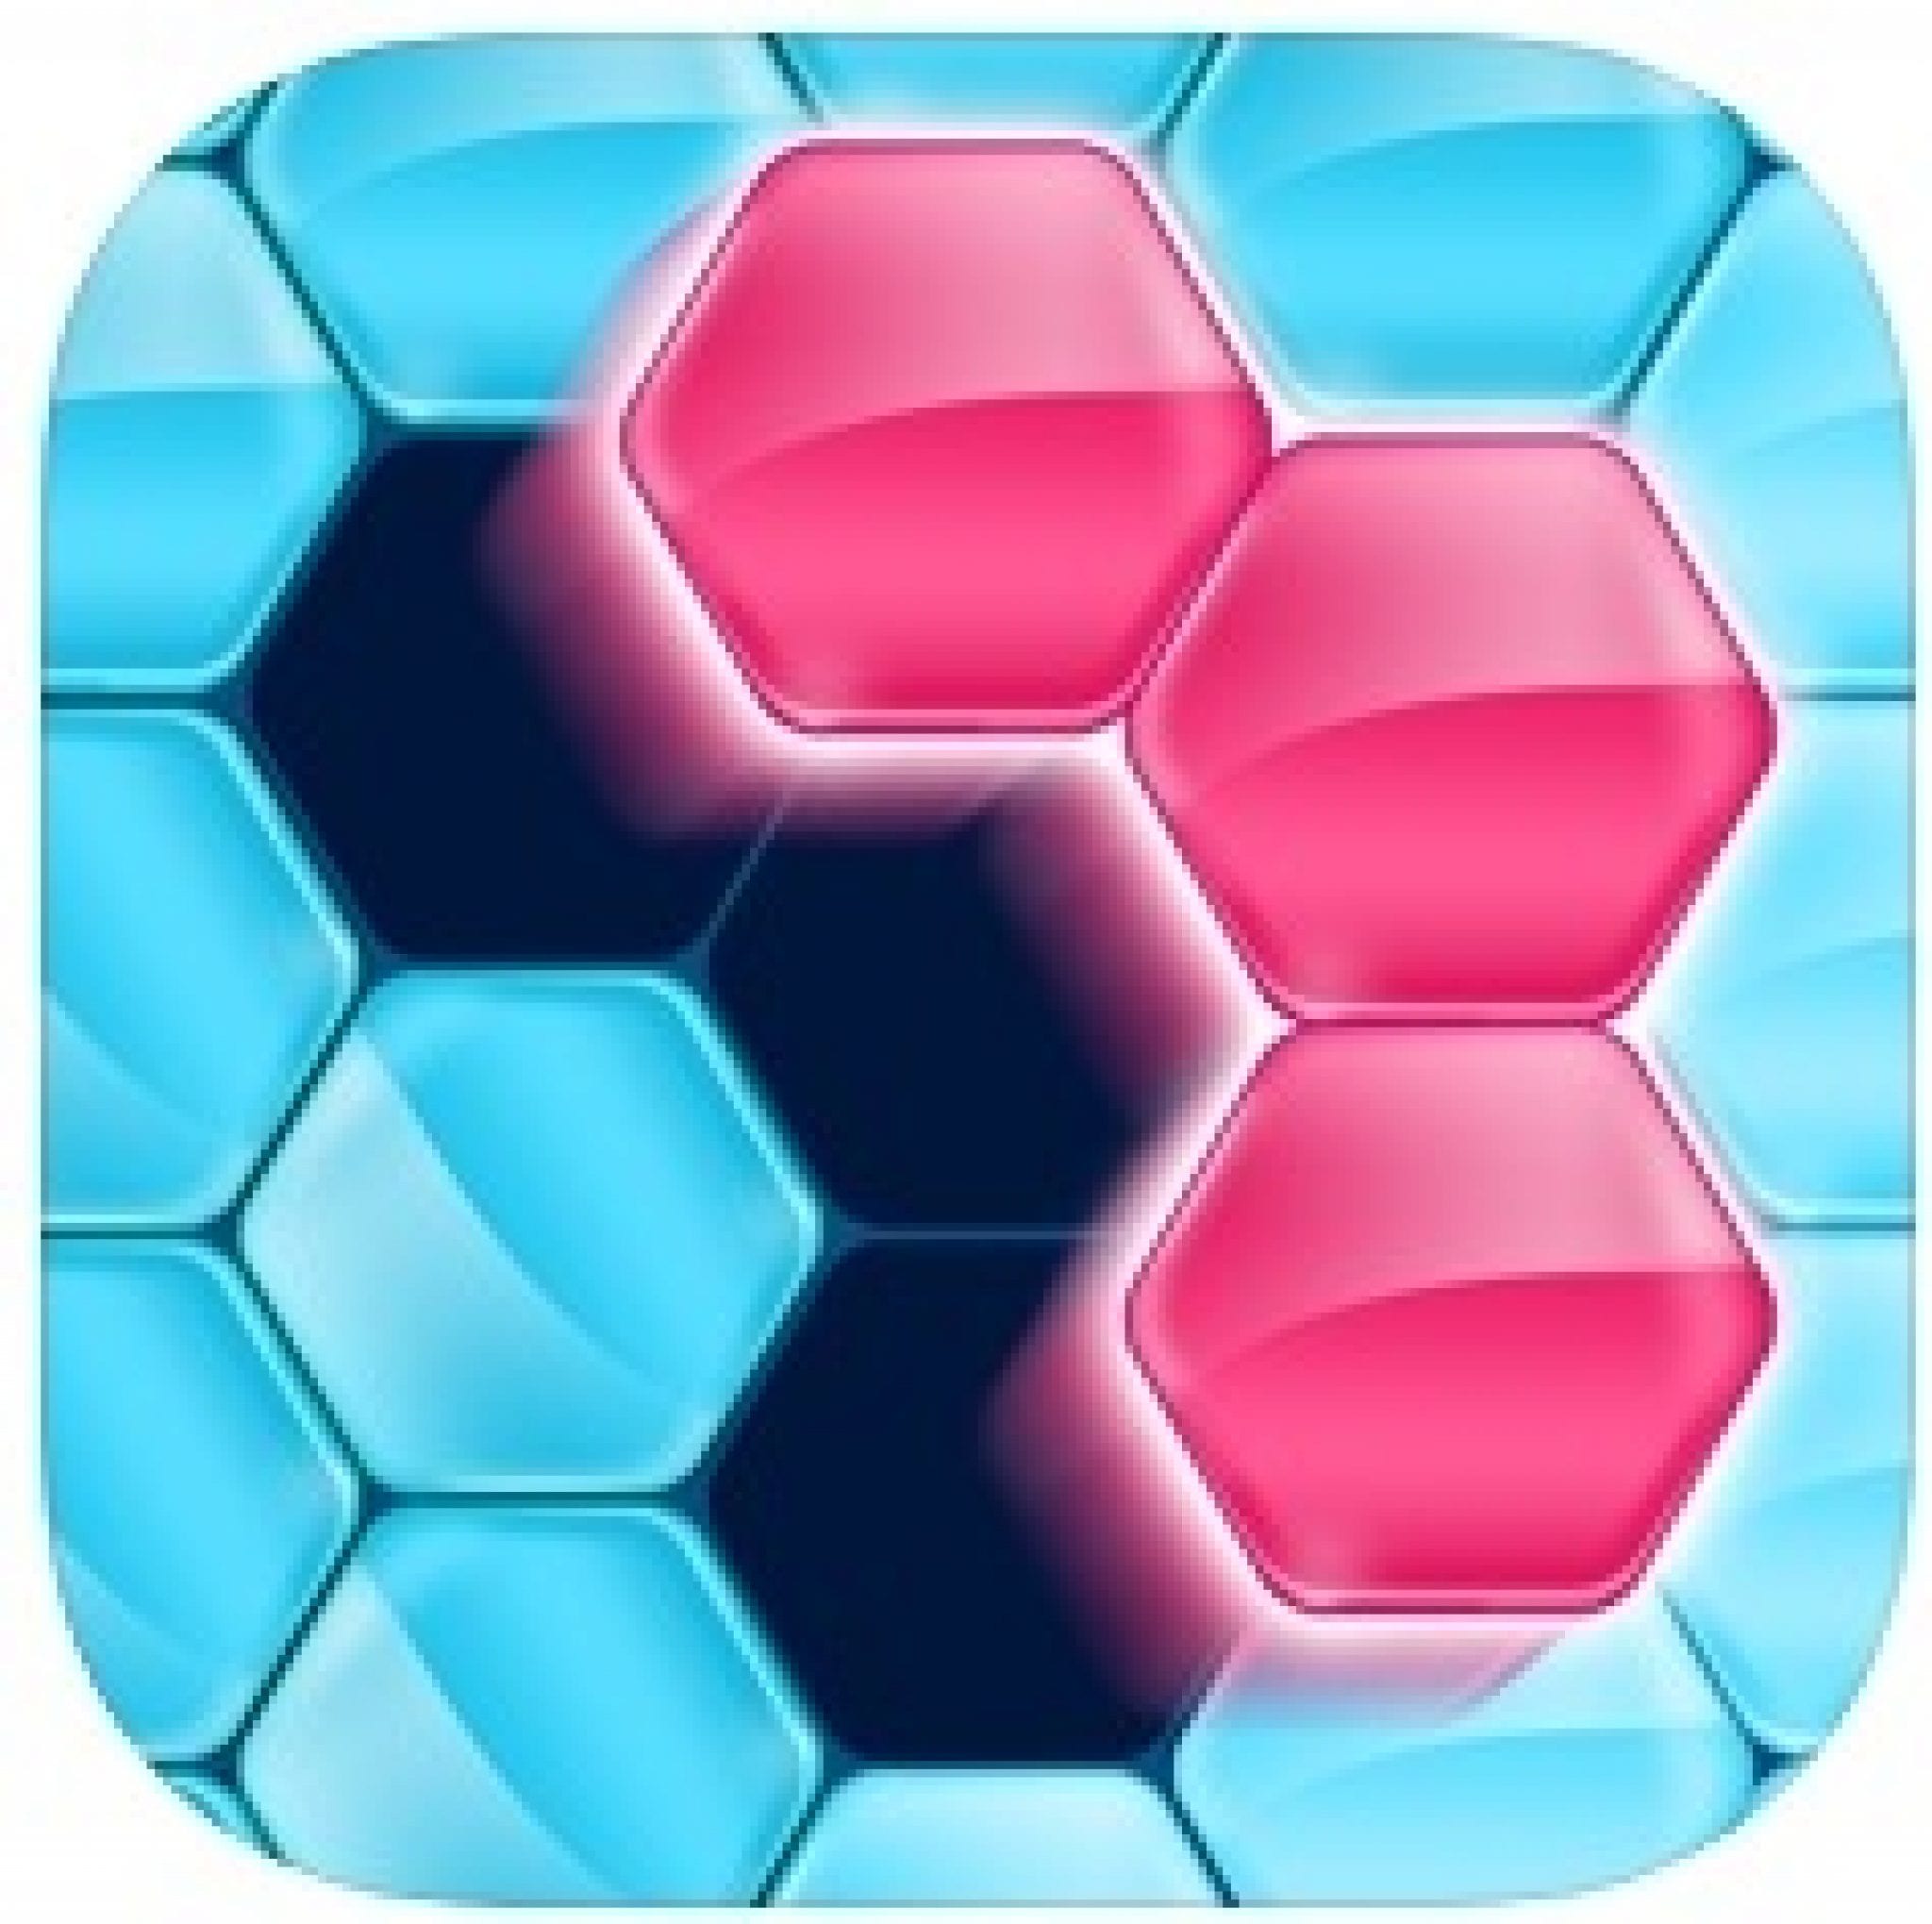 super hexagon free ios